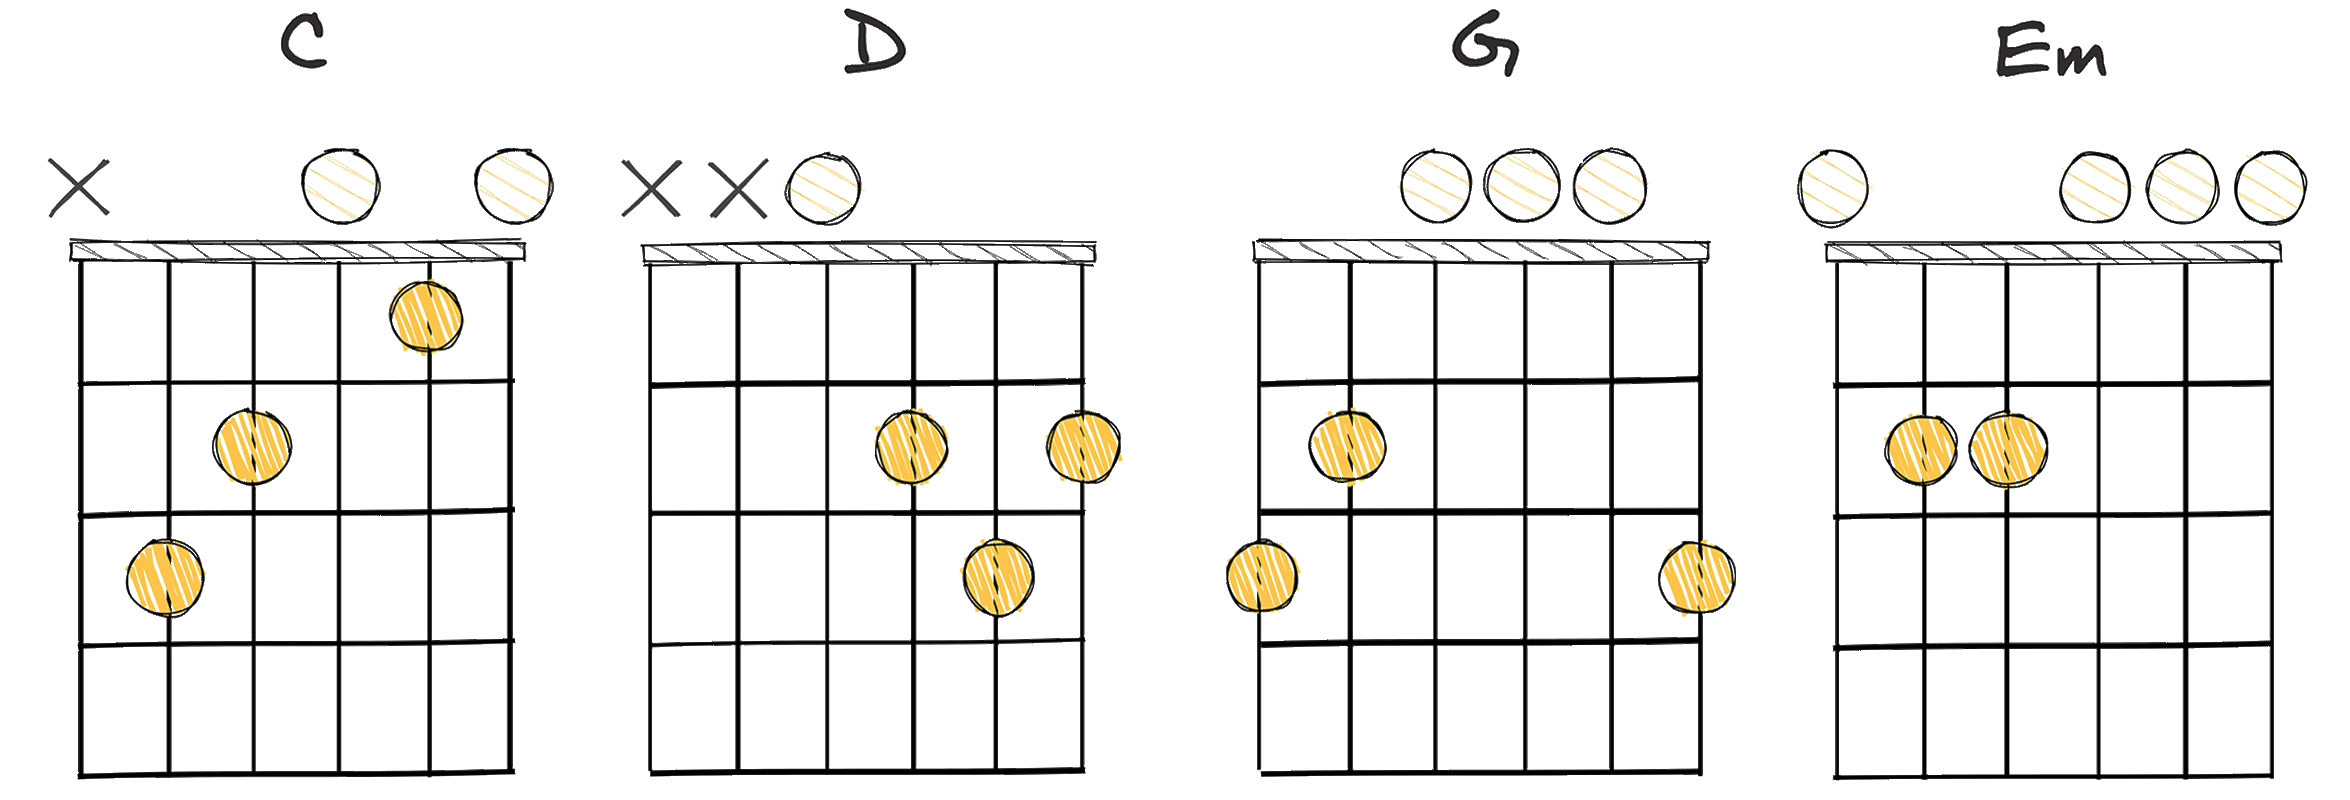 IV - V - I - vi (4-5-1-6) chords diagram